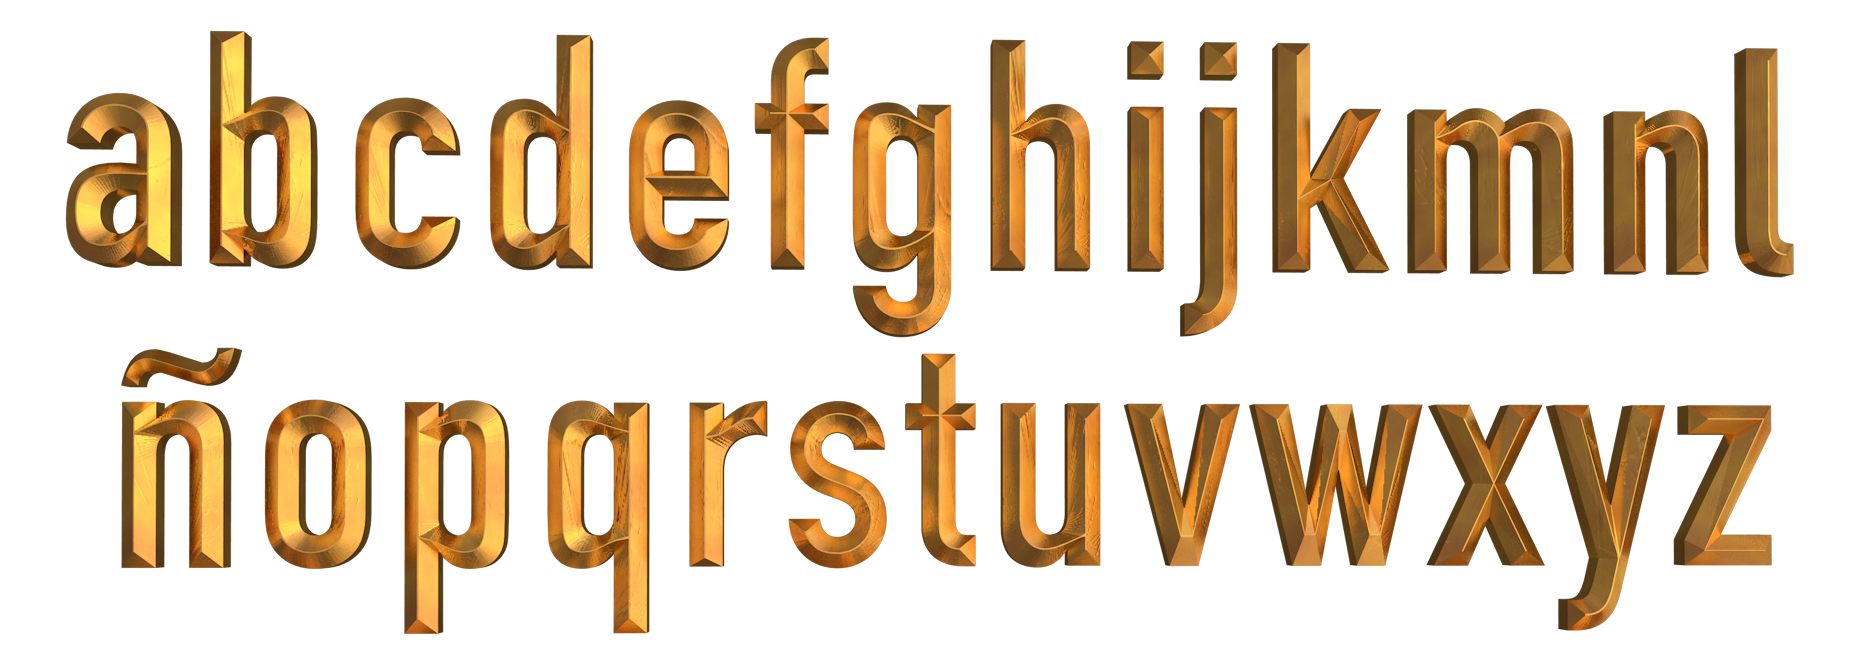 Sansserif Text Typeface Trade Gothic Logo PNG Image